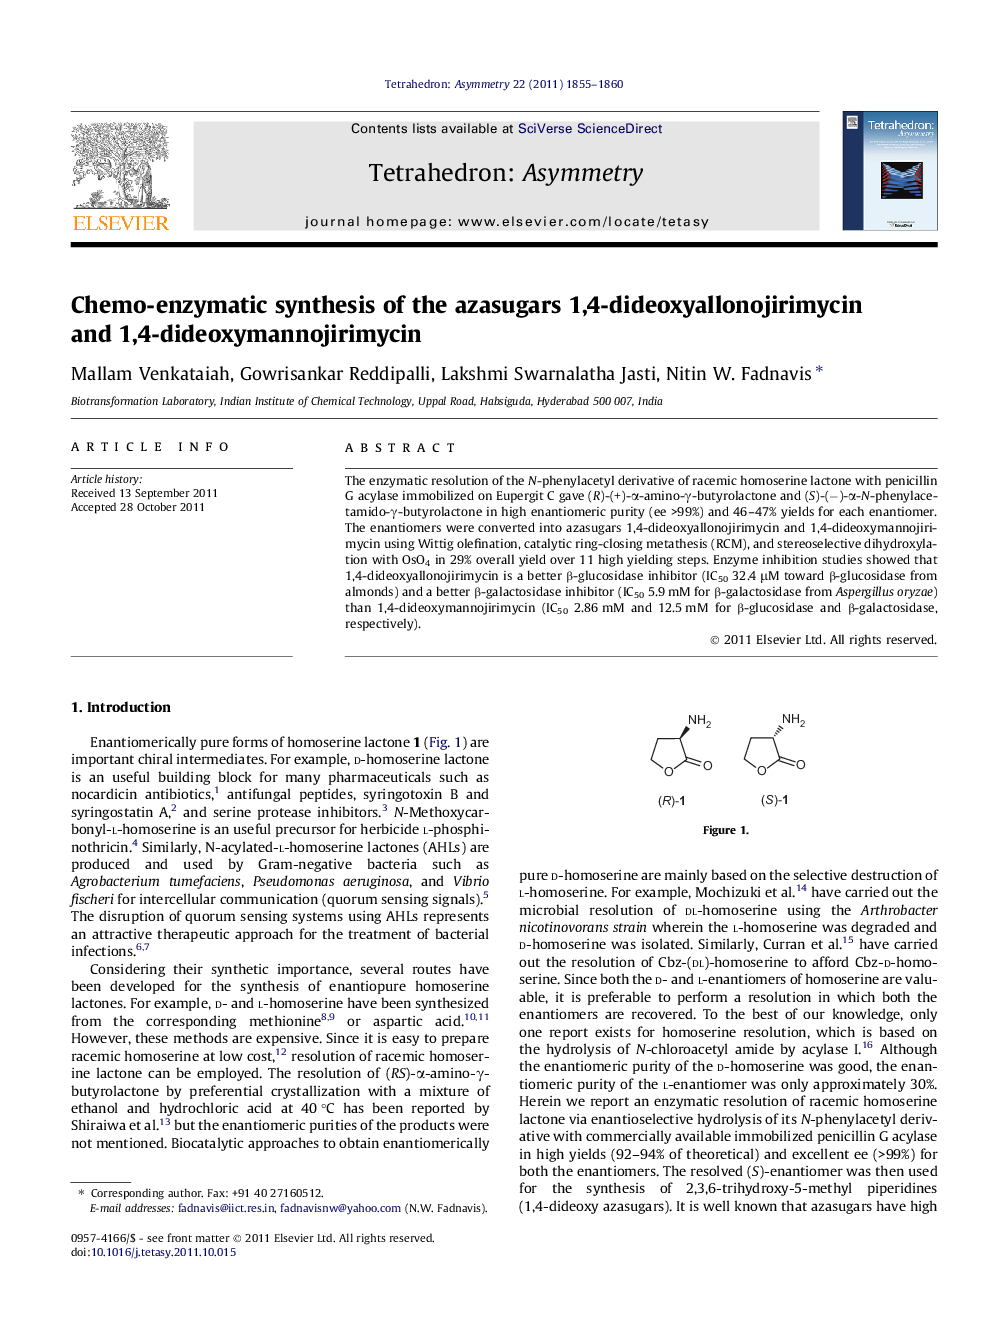 Chemo-enzymatic synthesis of the azasugars 1,4-dideoxyallonojirimycin and 1,4-dideoxymannojirimycin